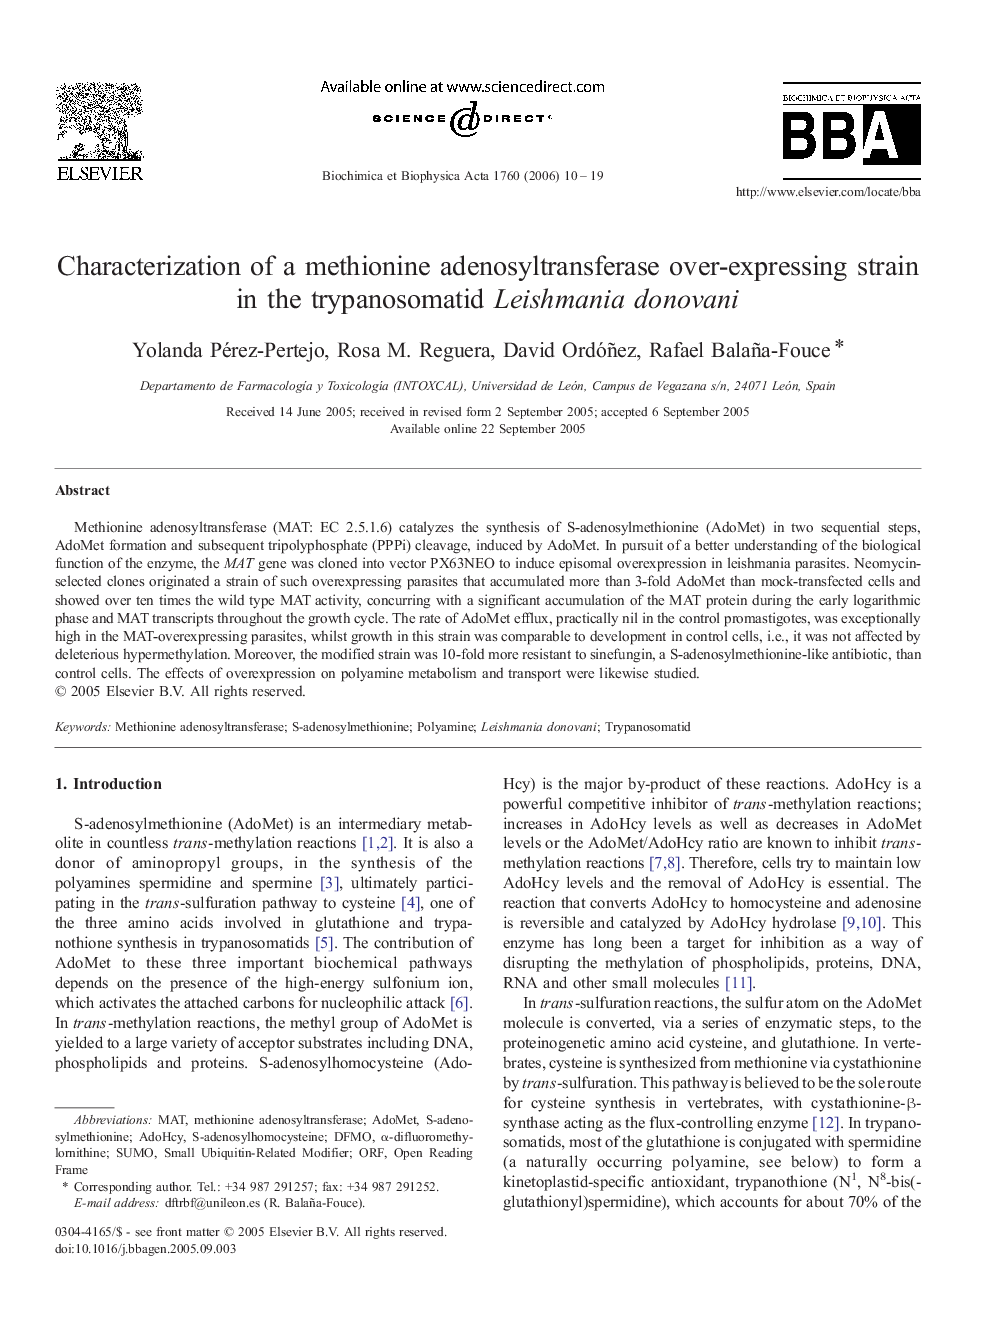 Characterization of a methionine adenosyltransferase over-expressing strain in the trypanosomatid Leishmania donovani